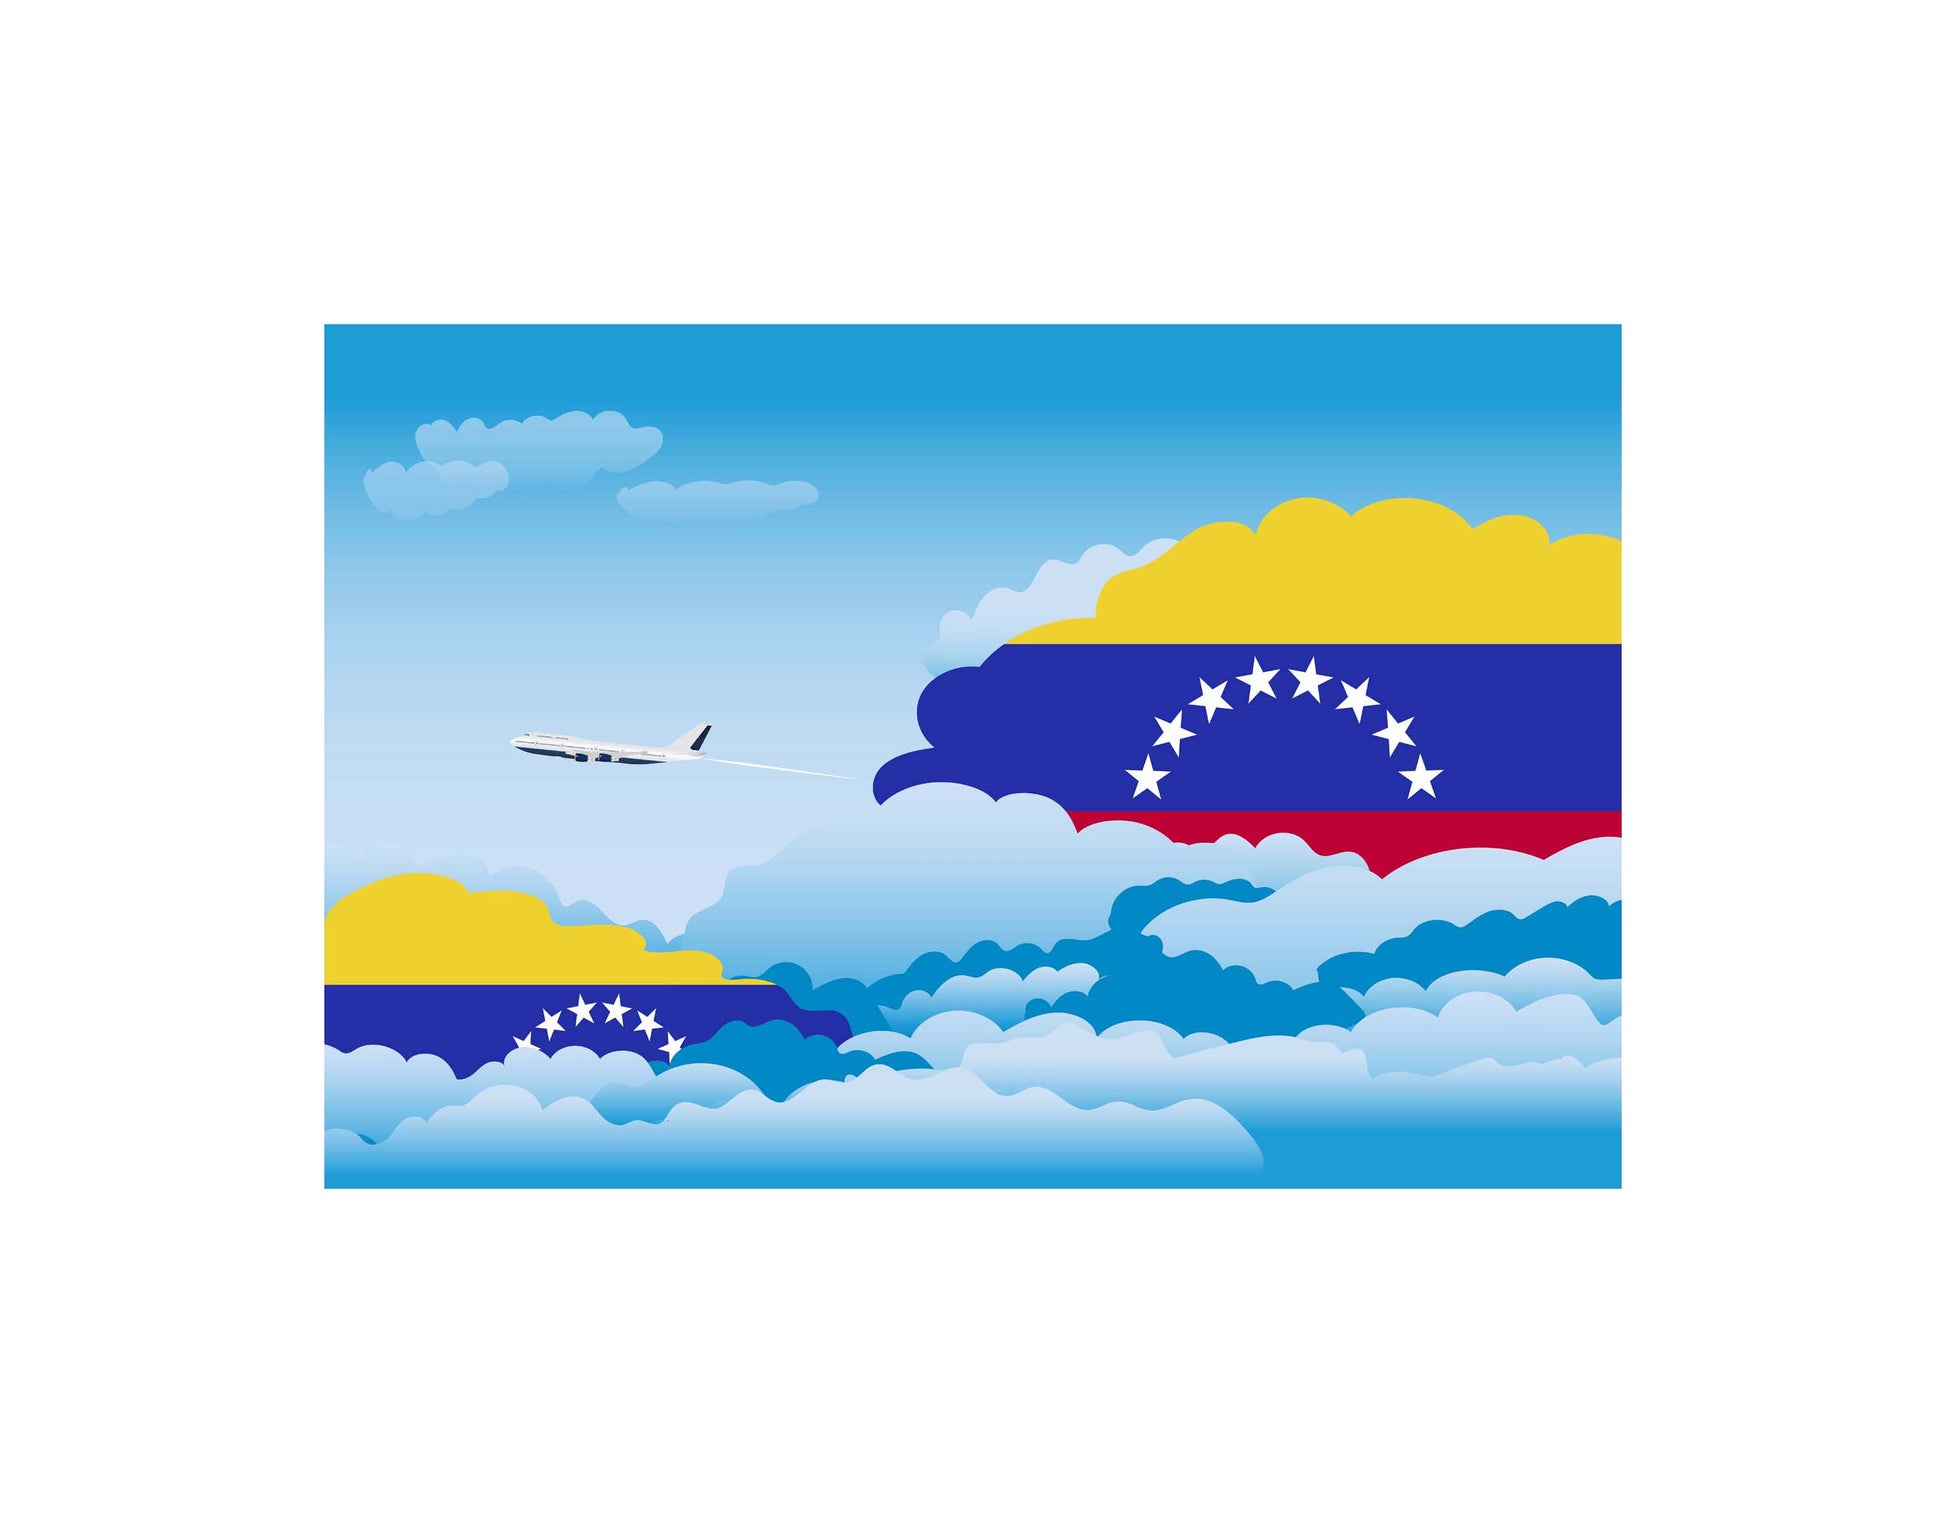 Venezuela Flags Day Clouds Canvas Print Framed